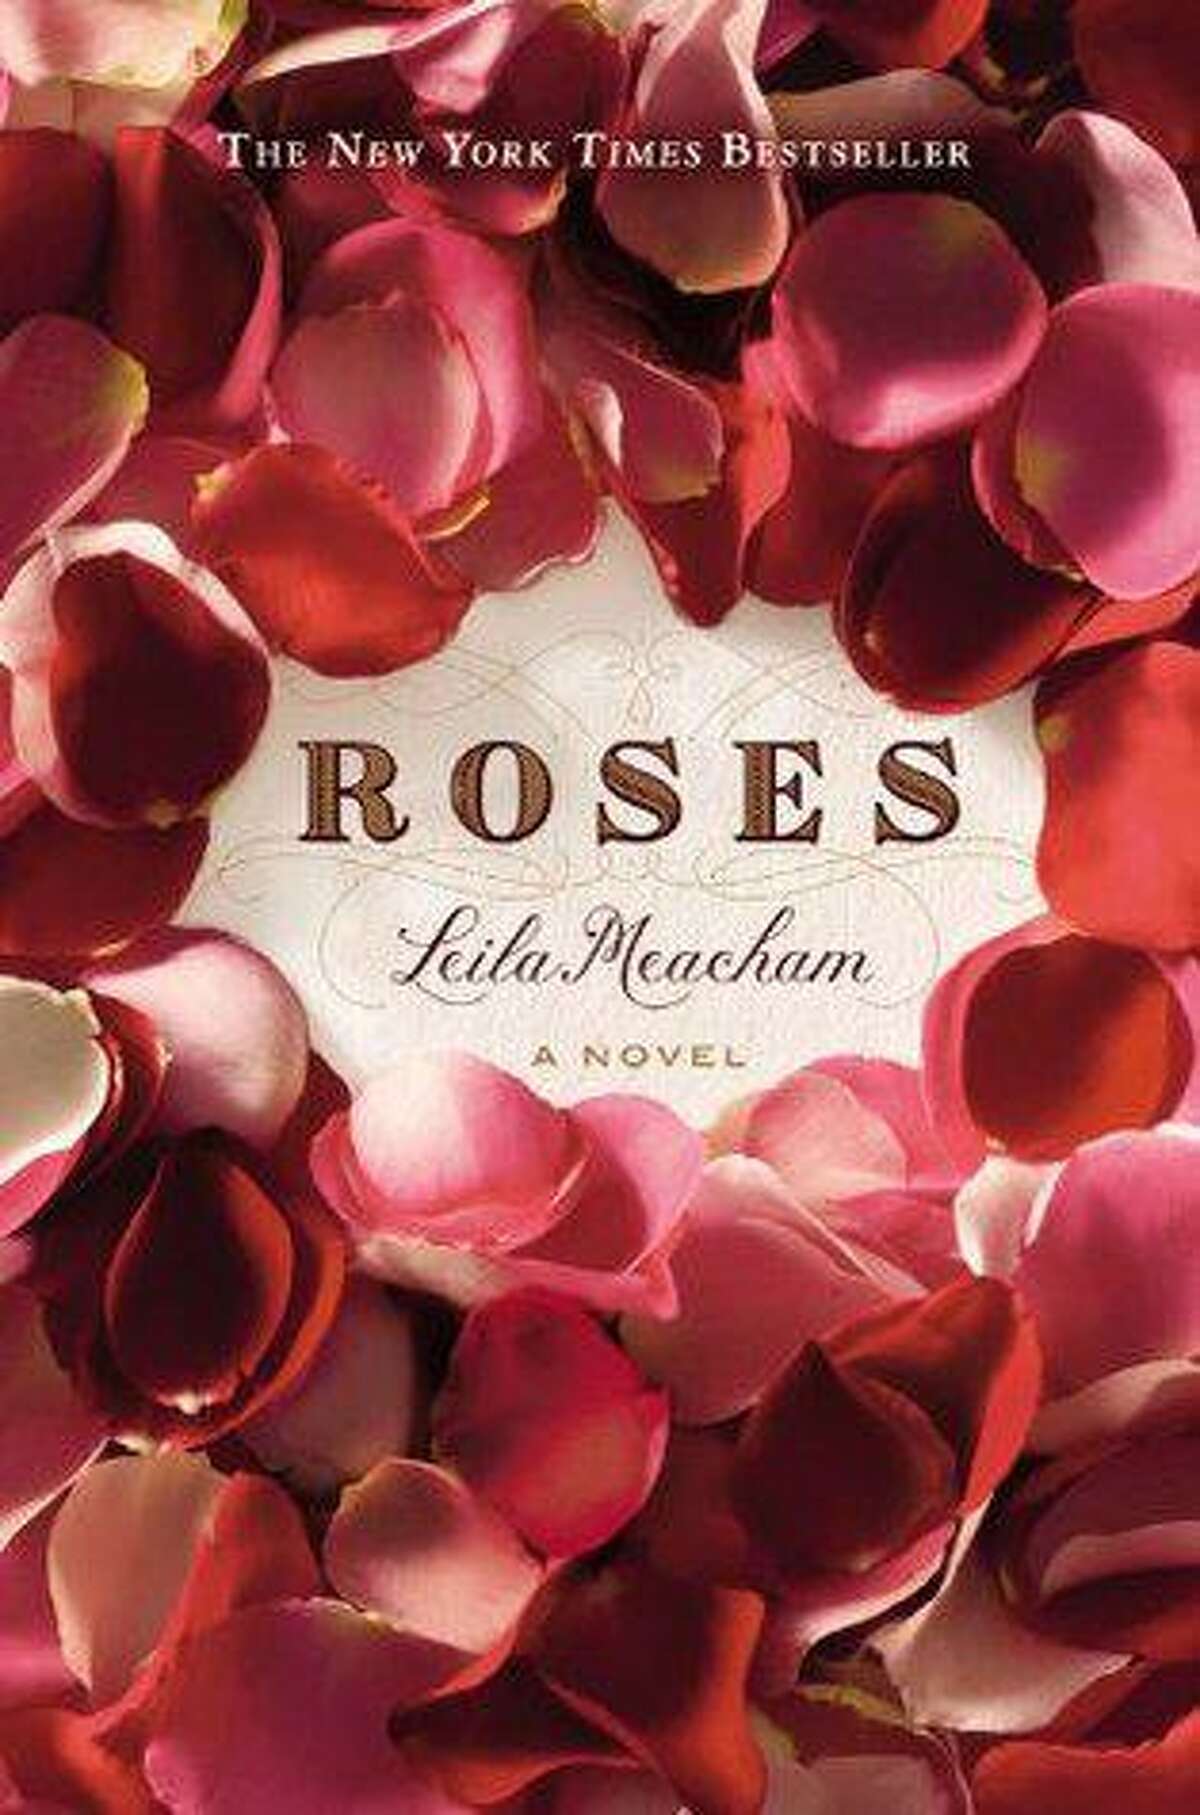 "Roses,” by Leila Meacham